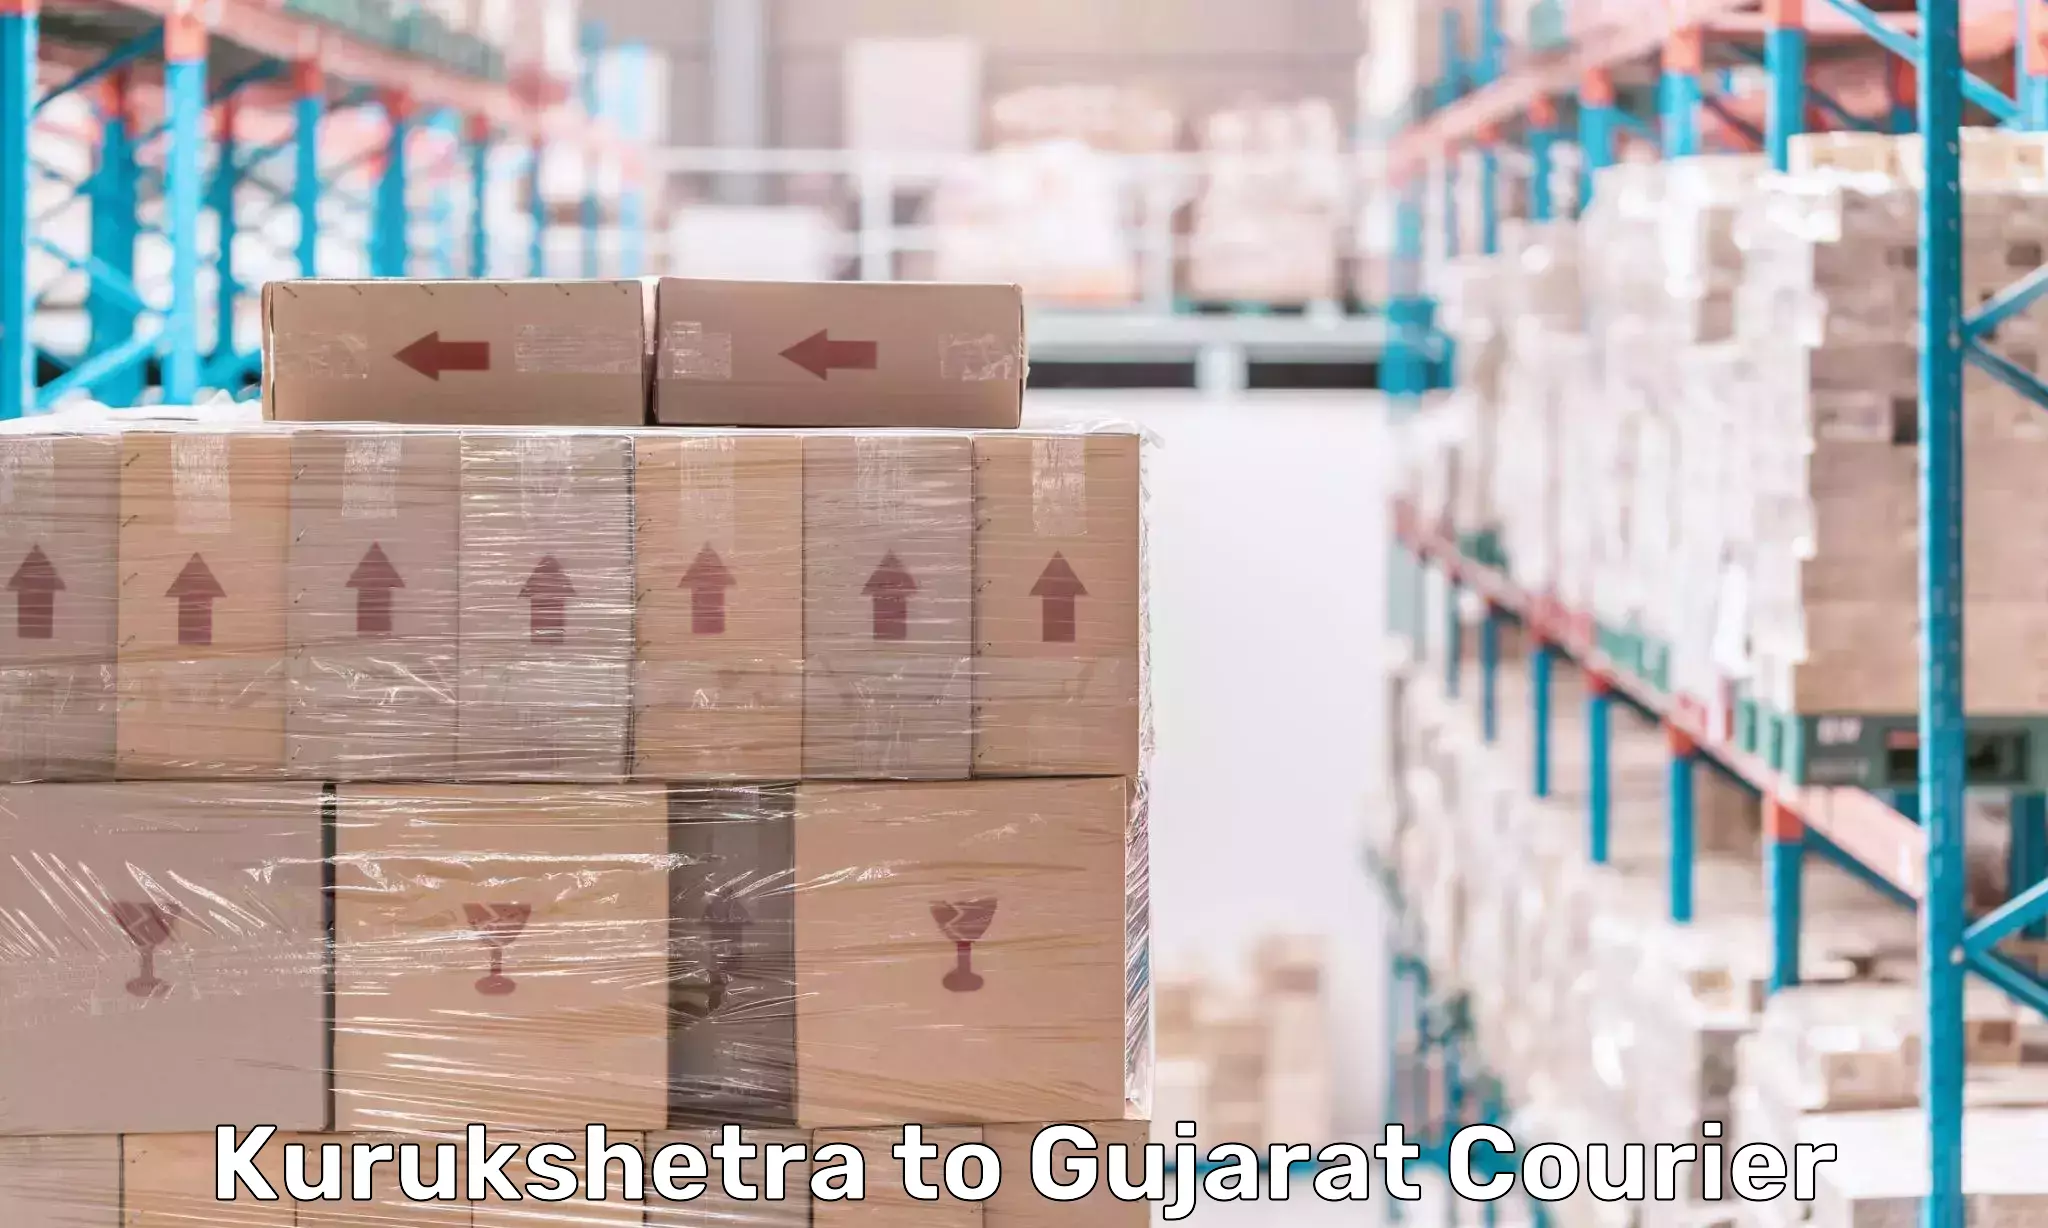 Nationwide delivery network Kurukshetra to Gujarat